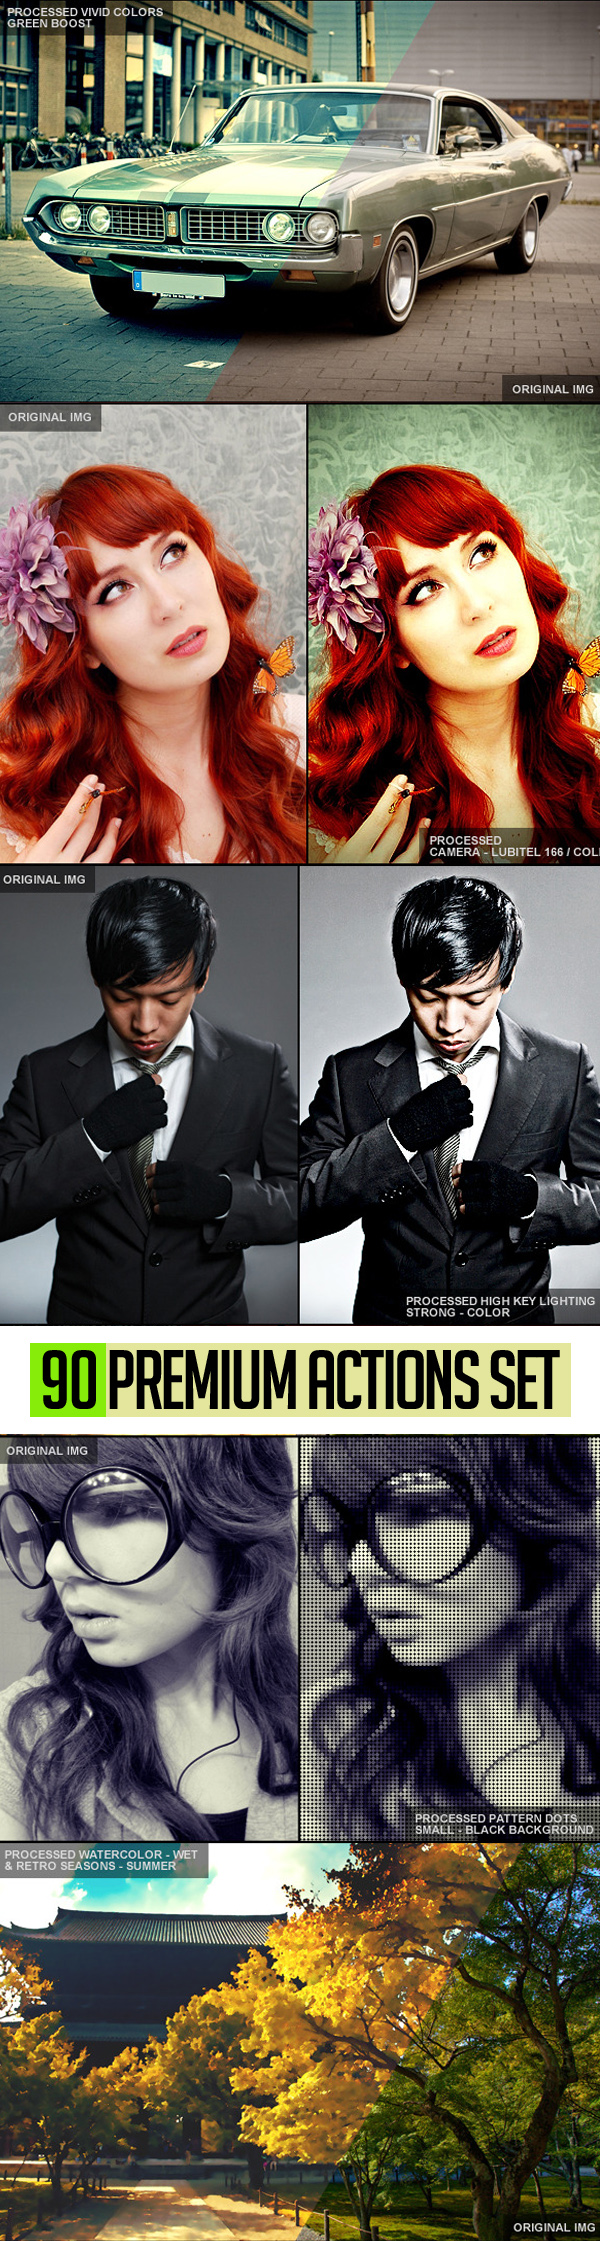 90 Premium Photoshop Actions Set